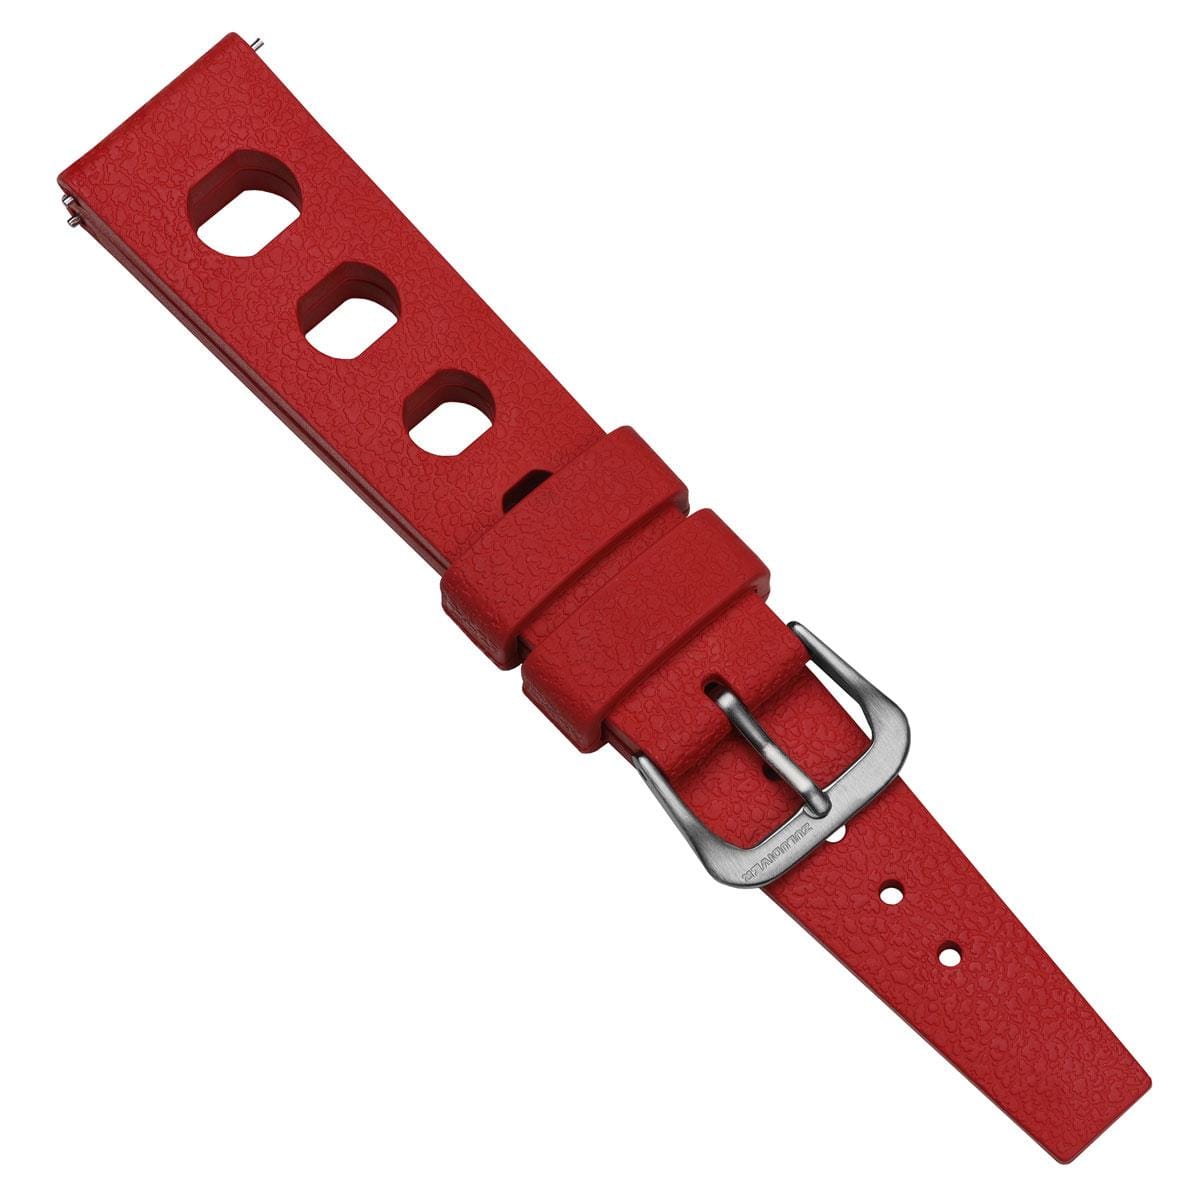 ZULUDIVER Tropical Regis Rubber Watch Strap - Red